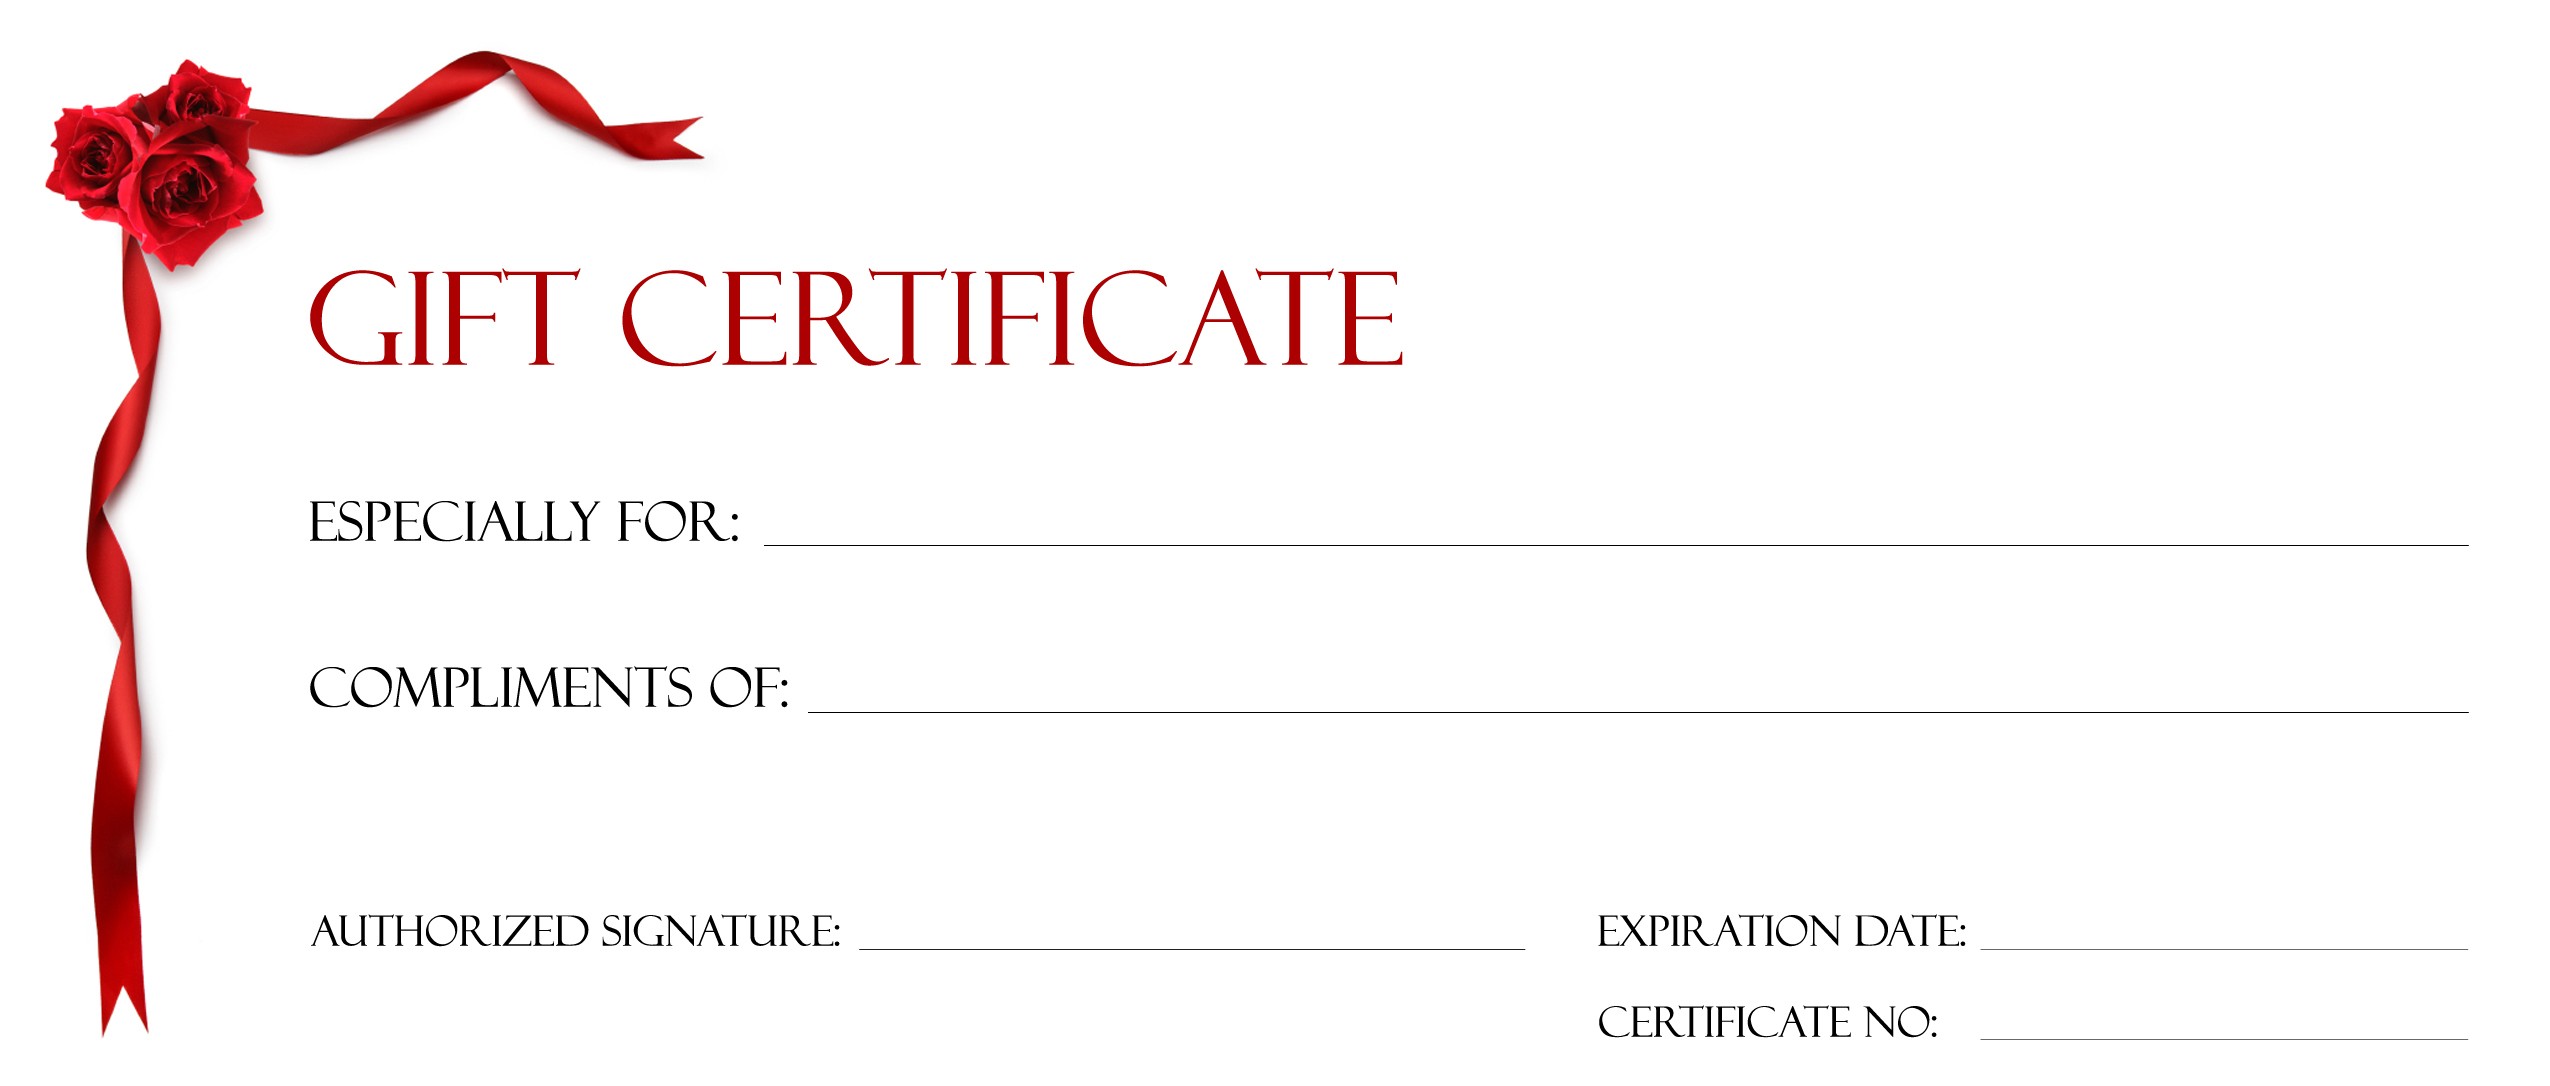 18 Certificate Templates Google Docs Wine Albania Gift Template